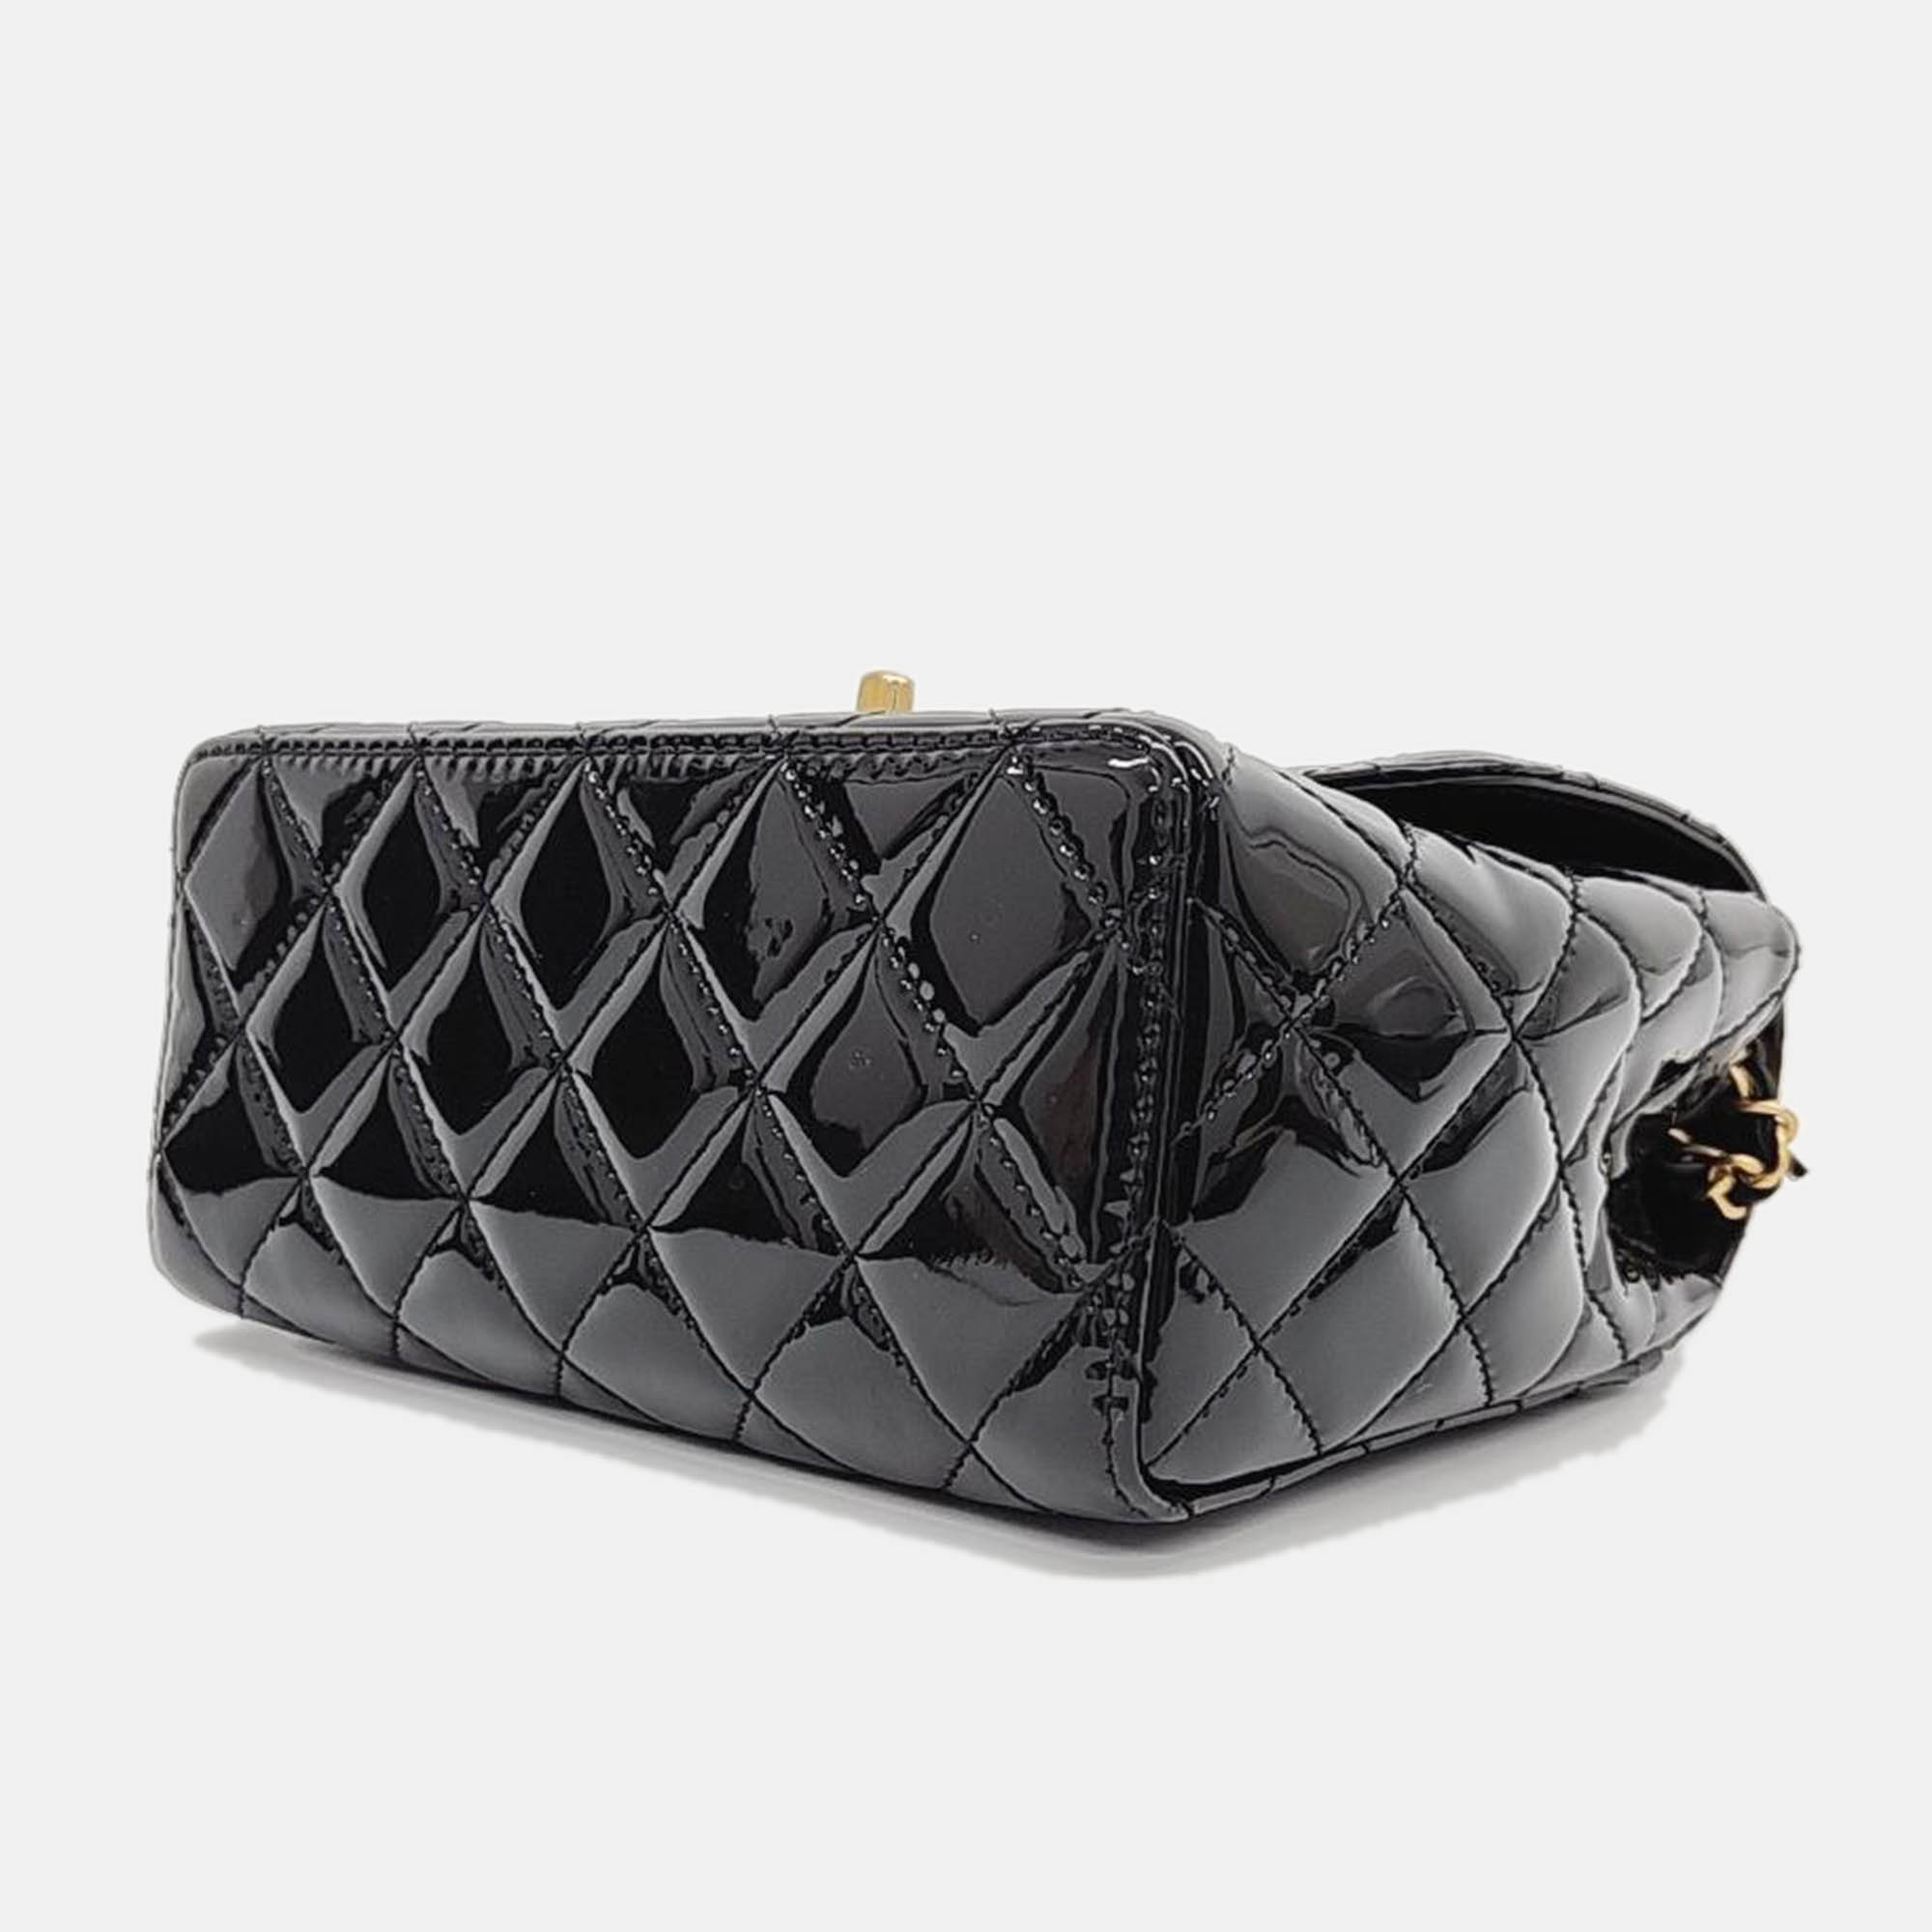 Chanel Black Leather Pedant Flap Bag